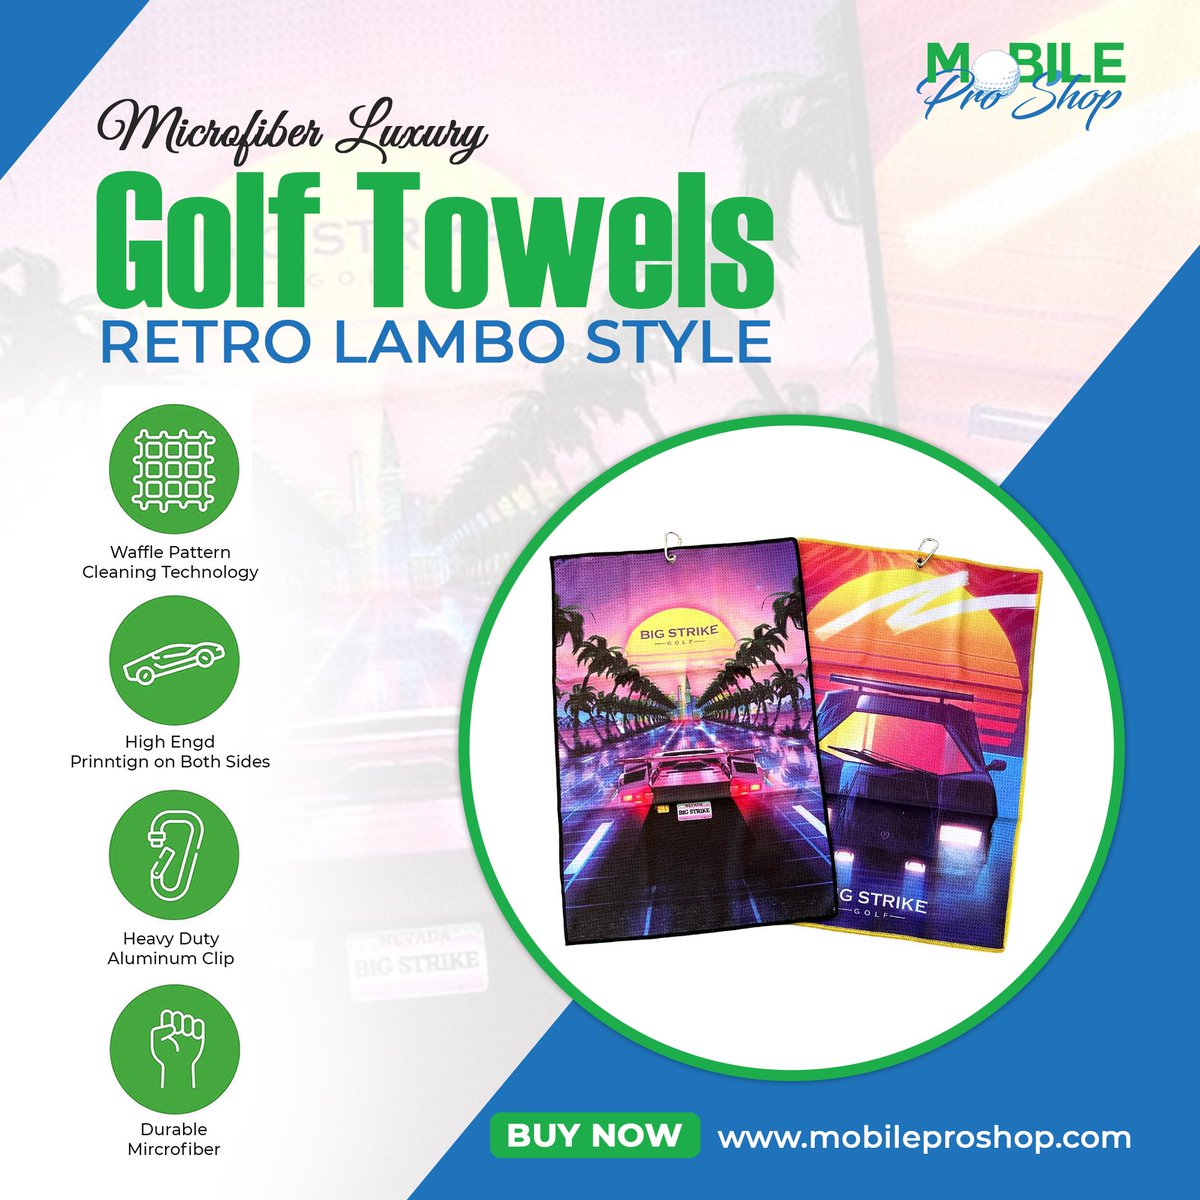 Big Strike Golf Towels Microfiber Luxury, Retro Lambo Style, and Your Mobile Pro Shop Upgrade!
#MobileProShop #GolfTowelSet #LamboStyle #ModernRetroGolf #GolfEssentials #ClubCare #GolfingElegance #MicrofiberTowels #OnTheGreen #GolfAccessories #SportsFashion